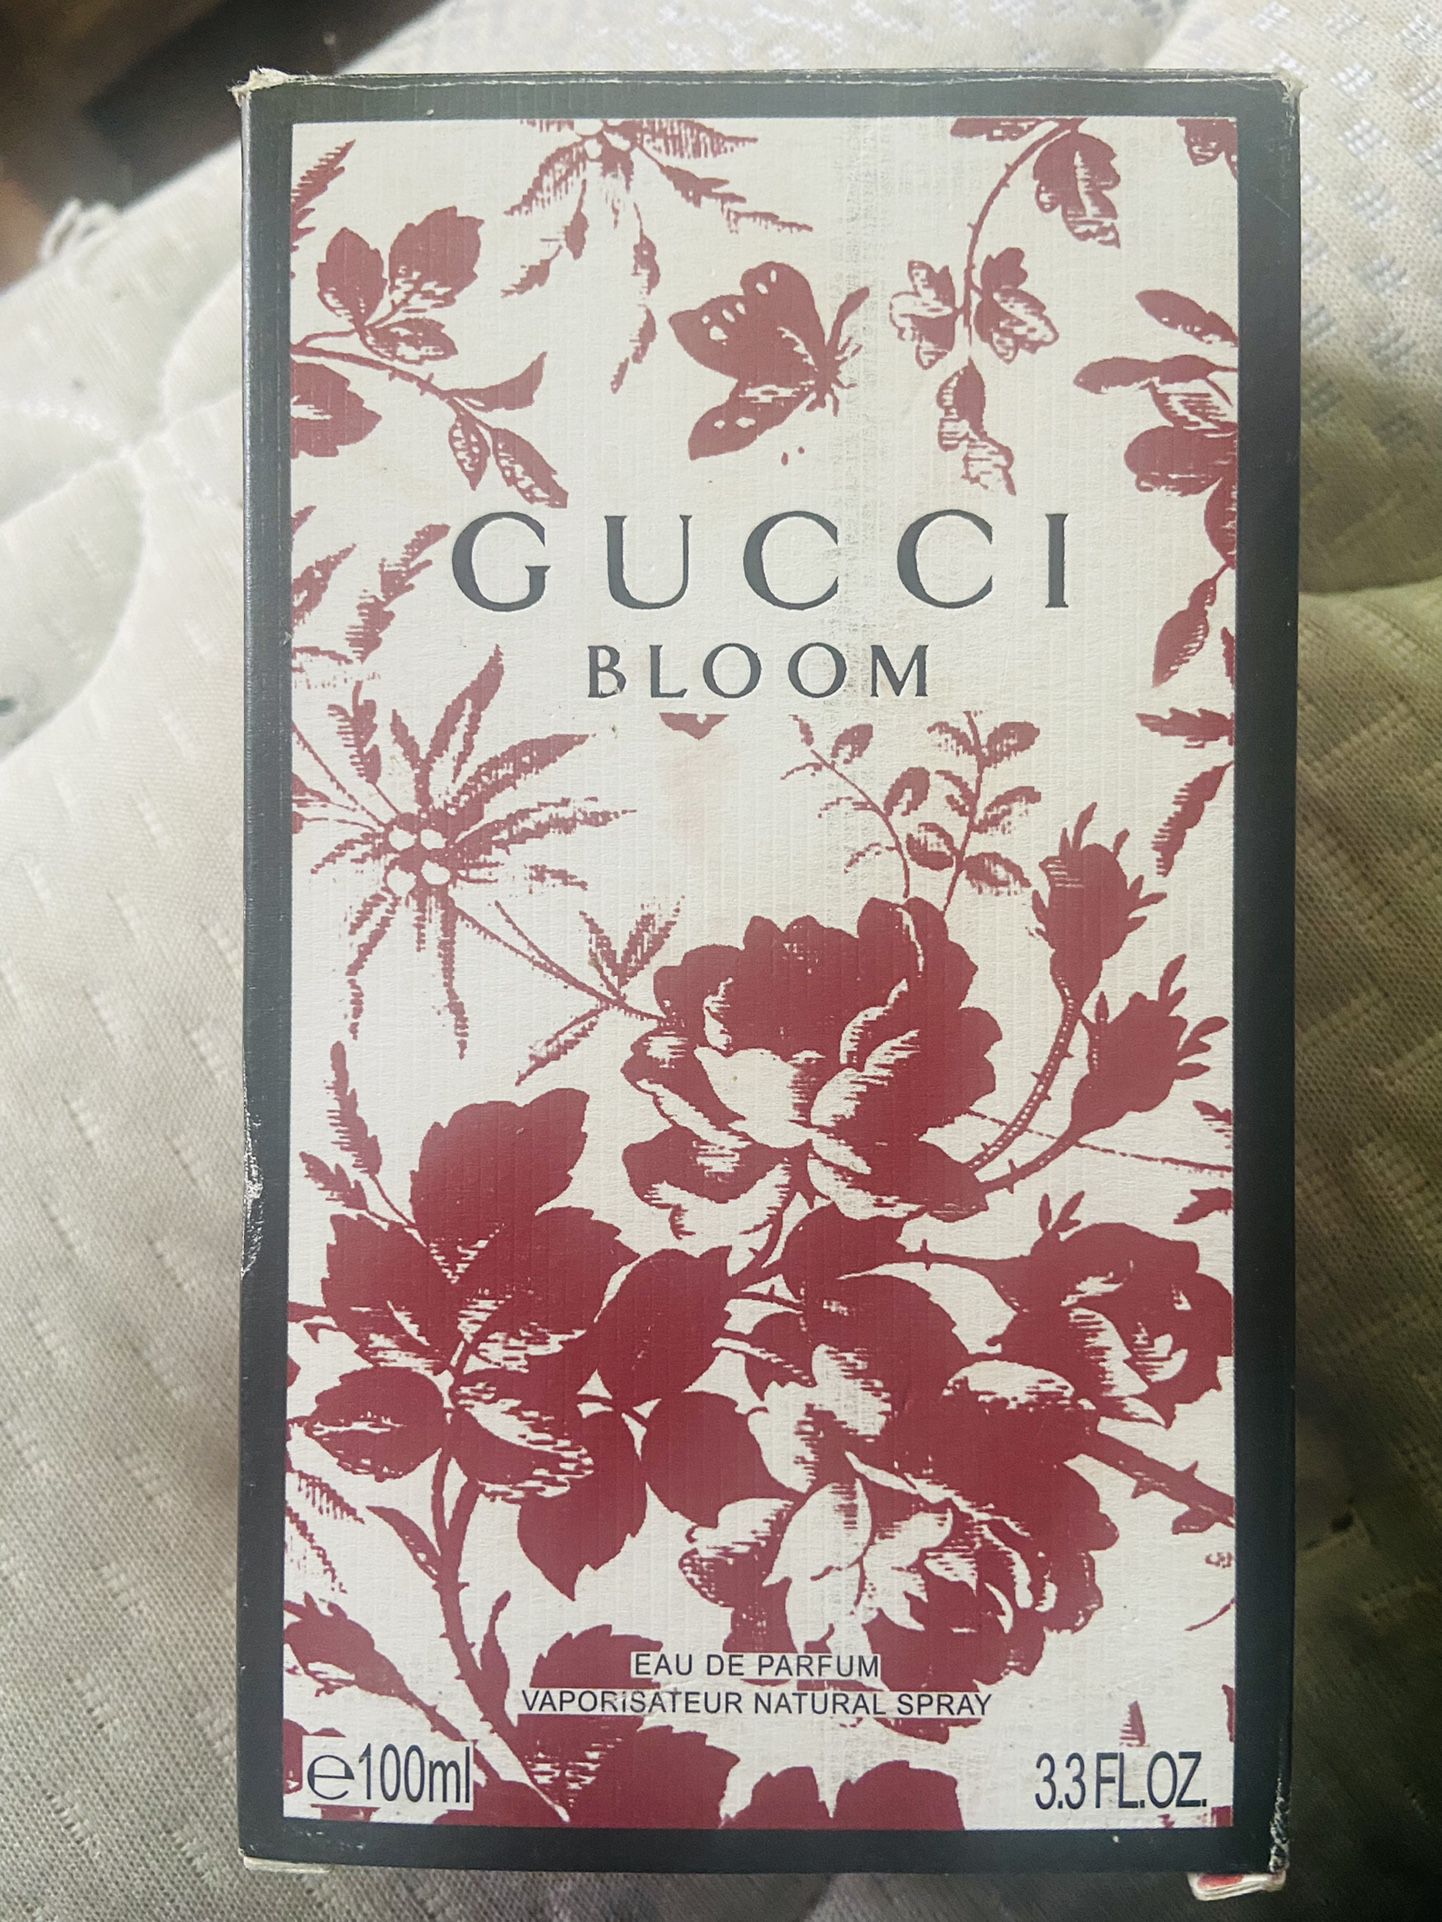 Gucci Bloom Perfume’s